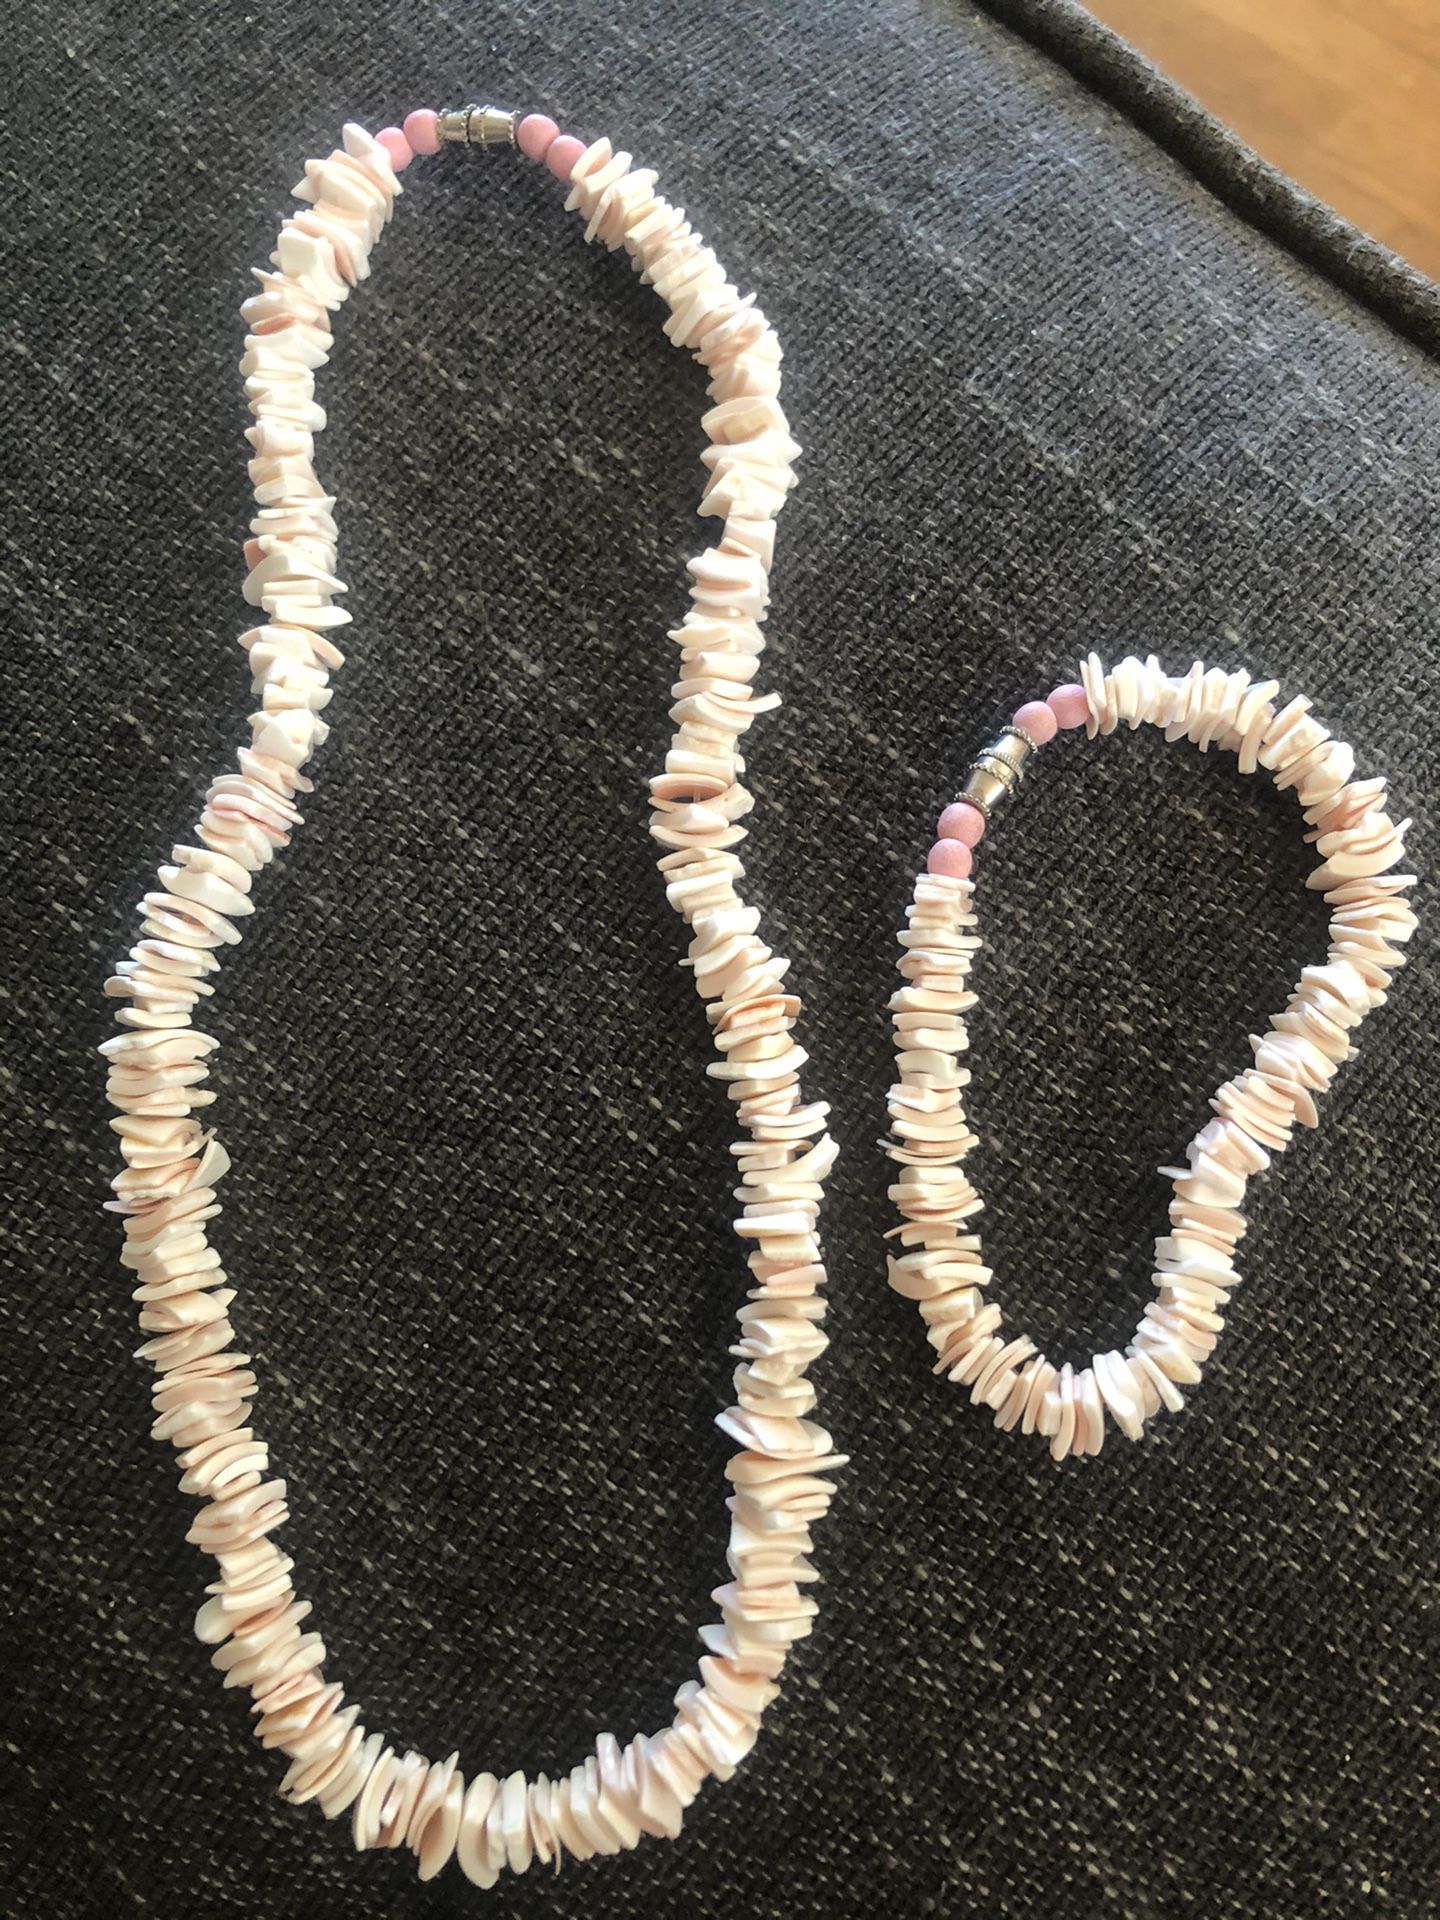 Pink shell necklace and bracelet set